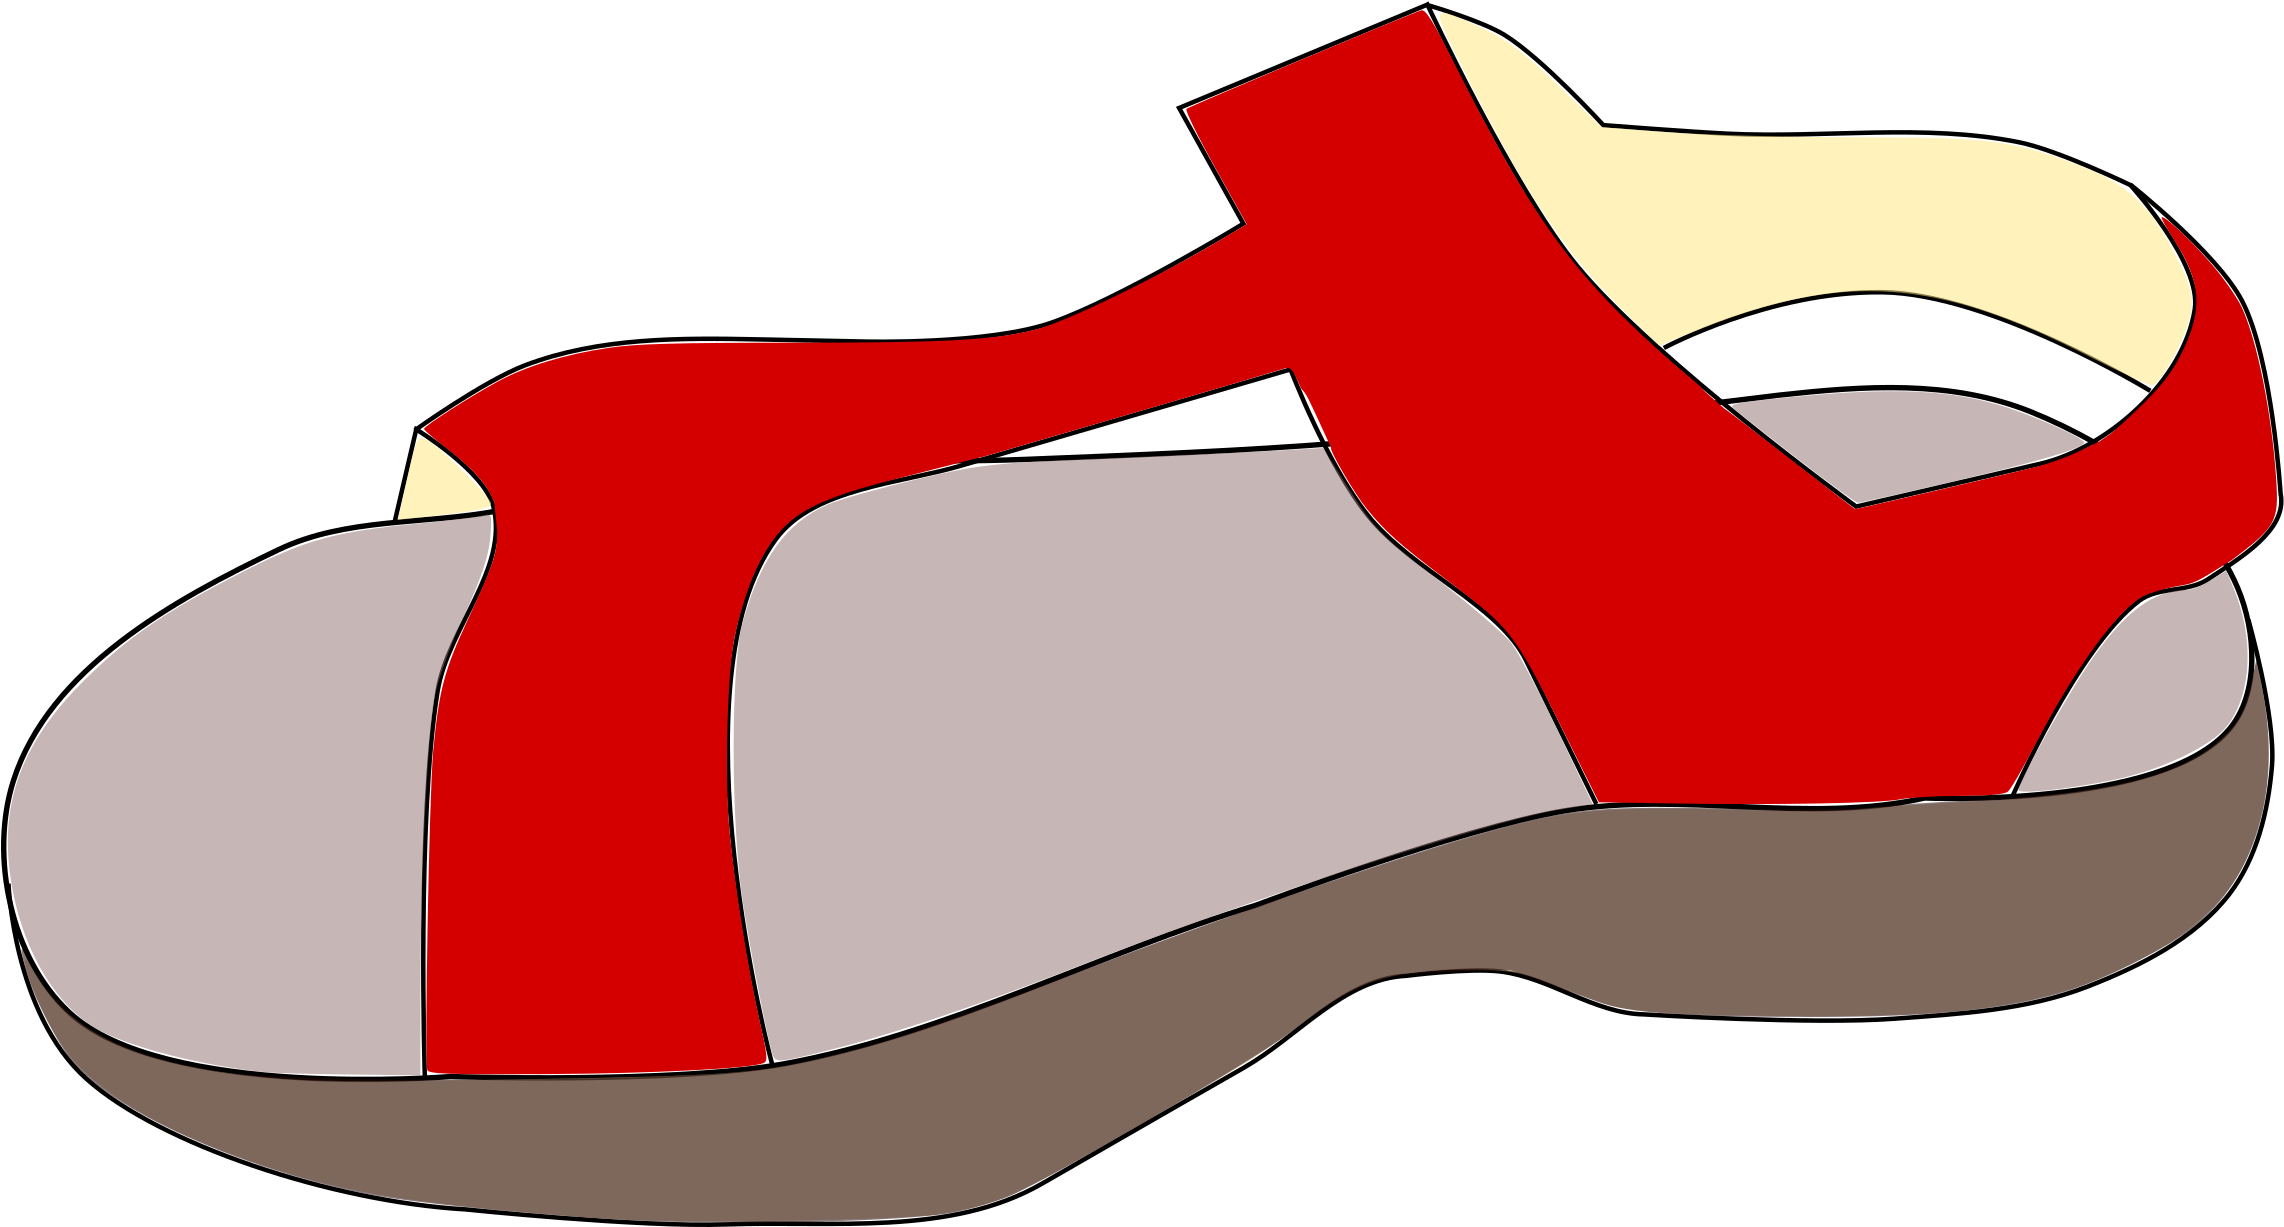 Shoes Cartoon Images 22, - Sandal Cartoon (2400x2400)